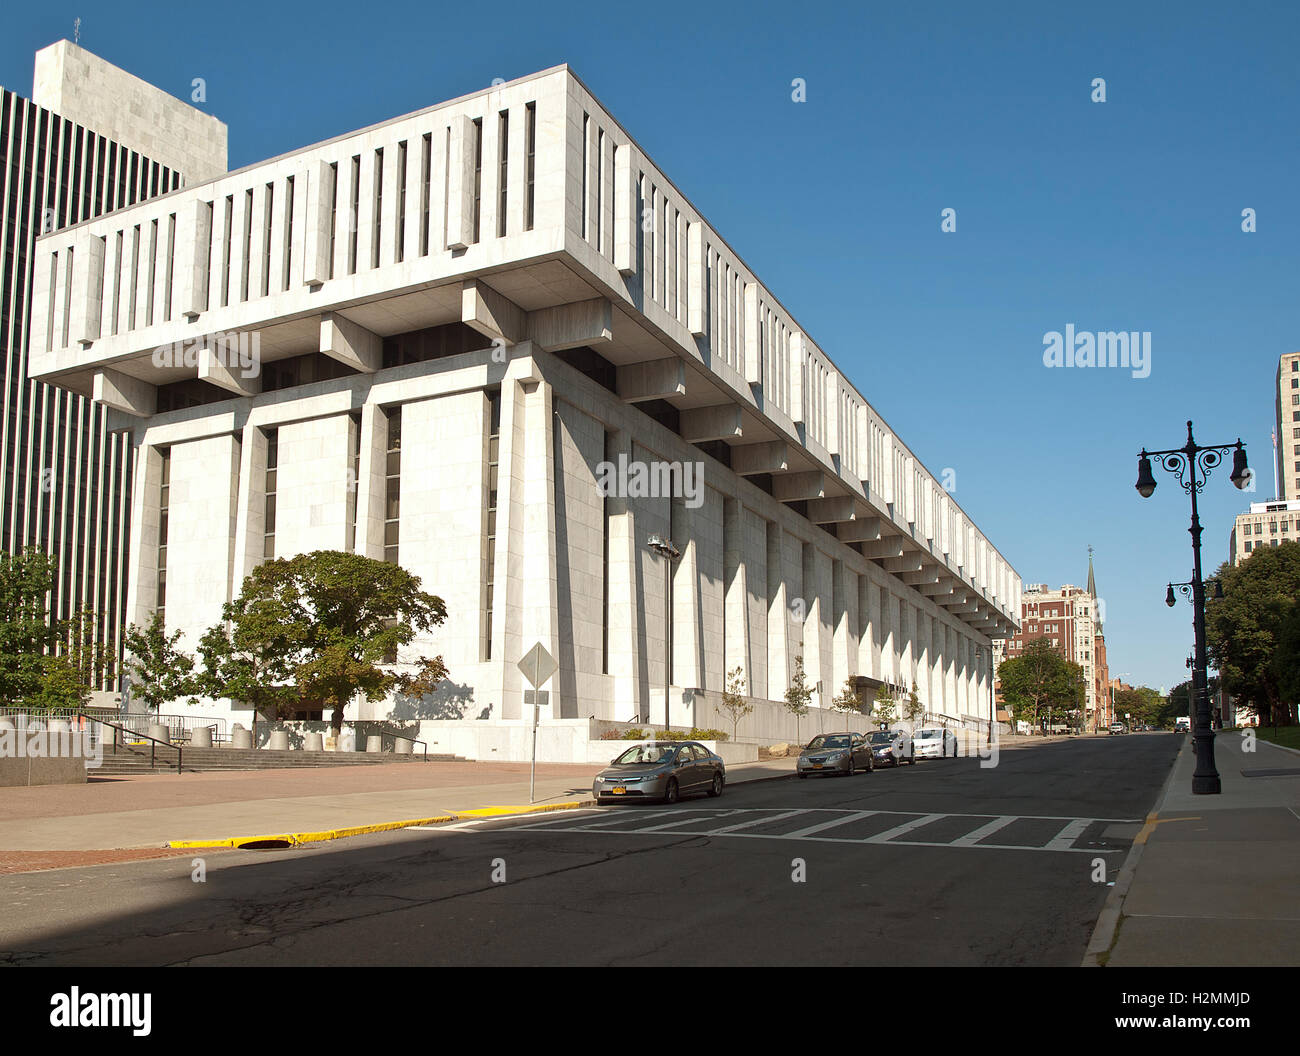 Legislative Building, Albany, New York, shot from a public street Stock Photo